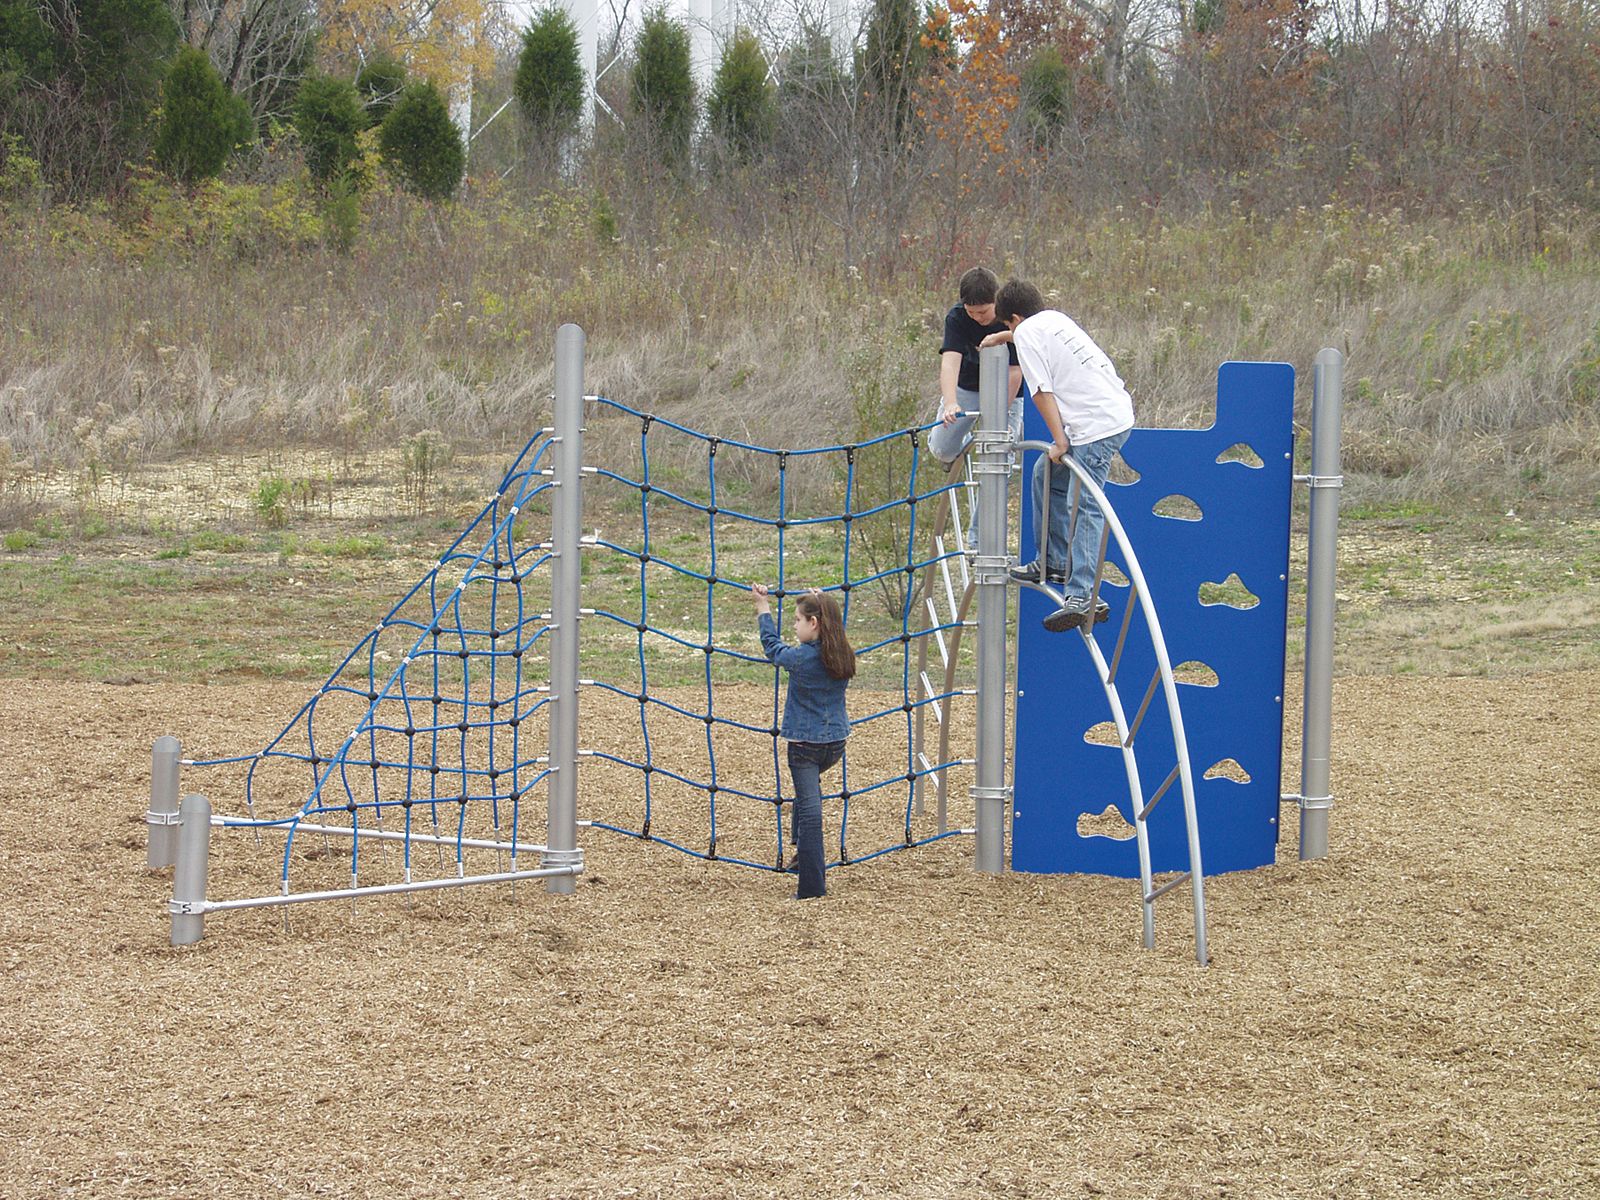 Hercules VII Climbing Structure | WillyGoat Playground & Park Equipment